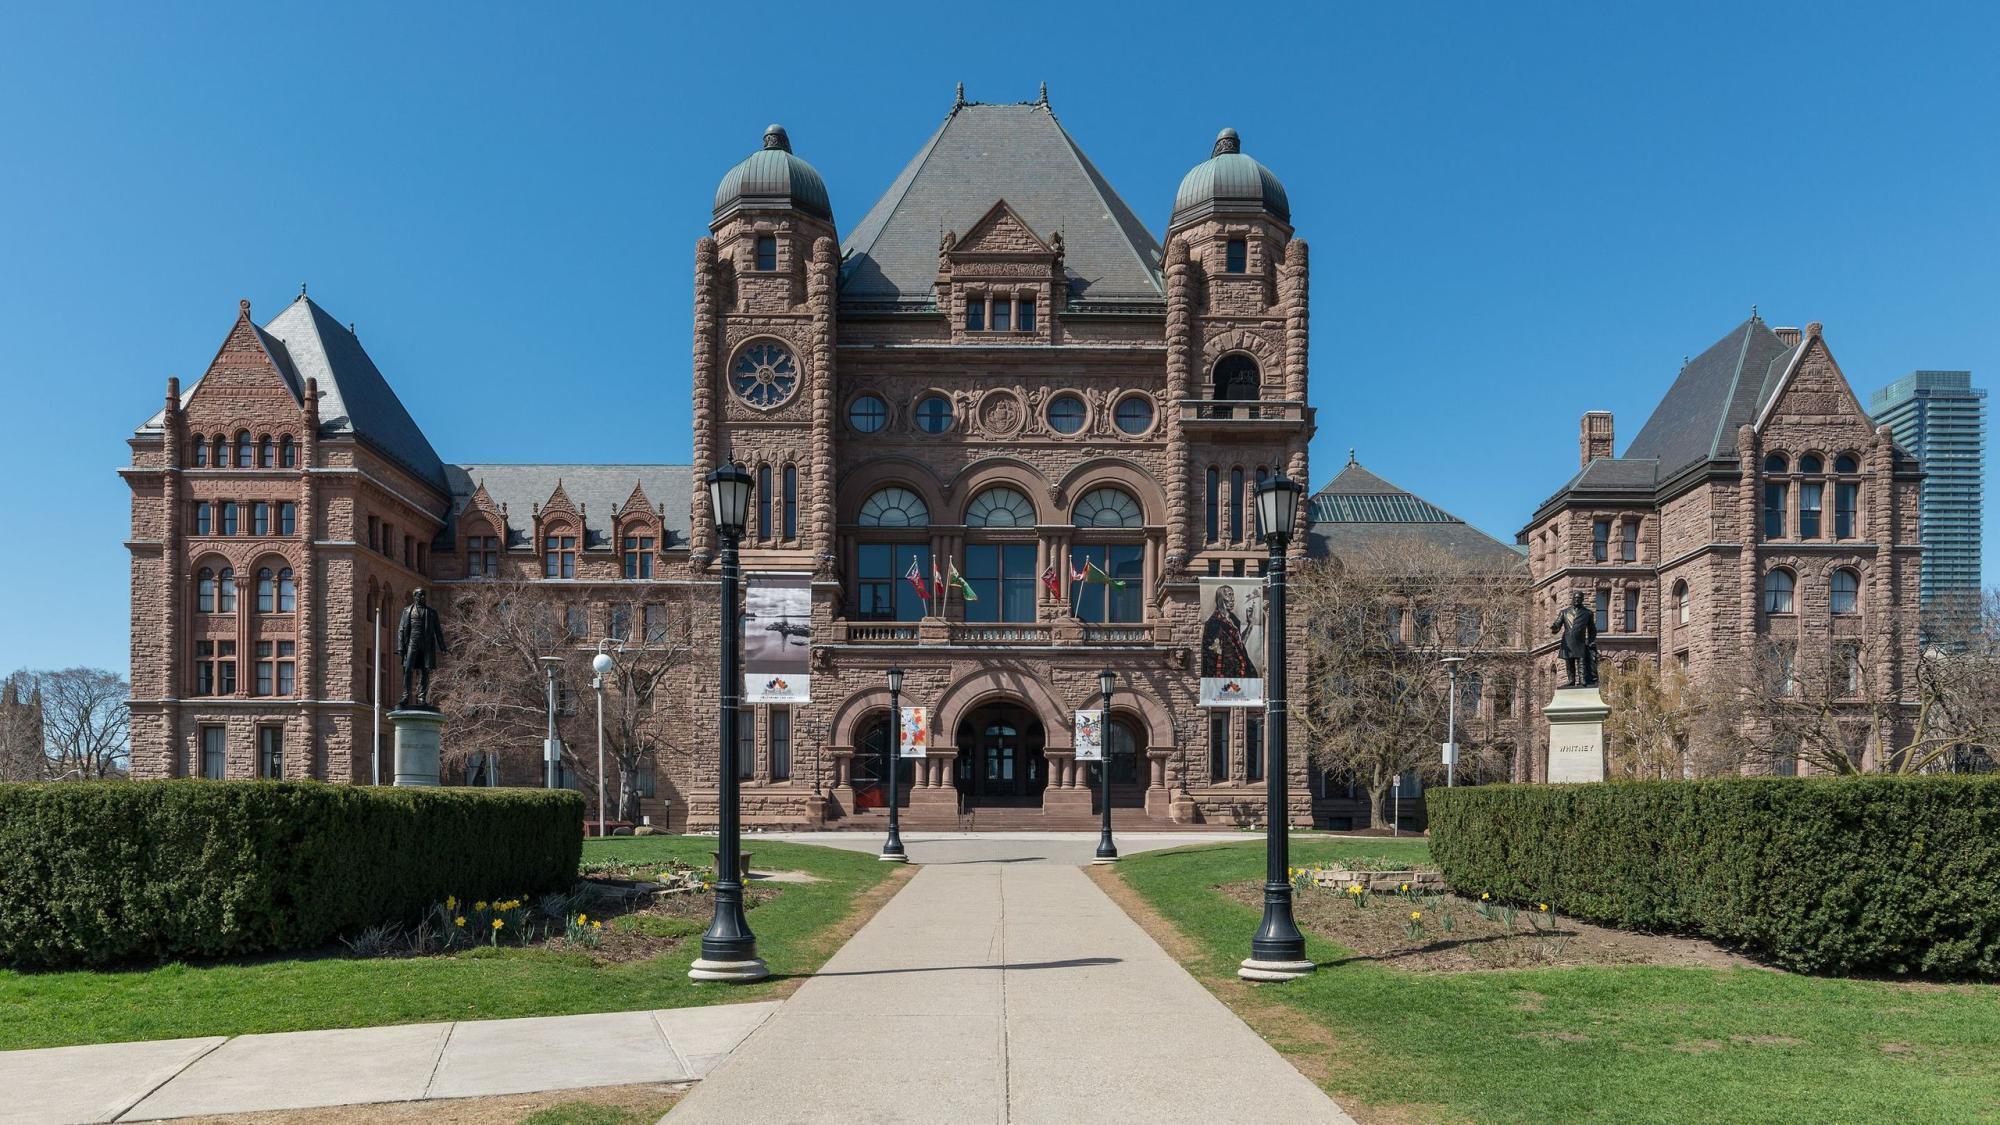 The Ontario legislative building in Toronto